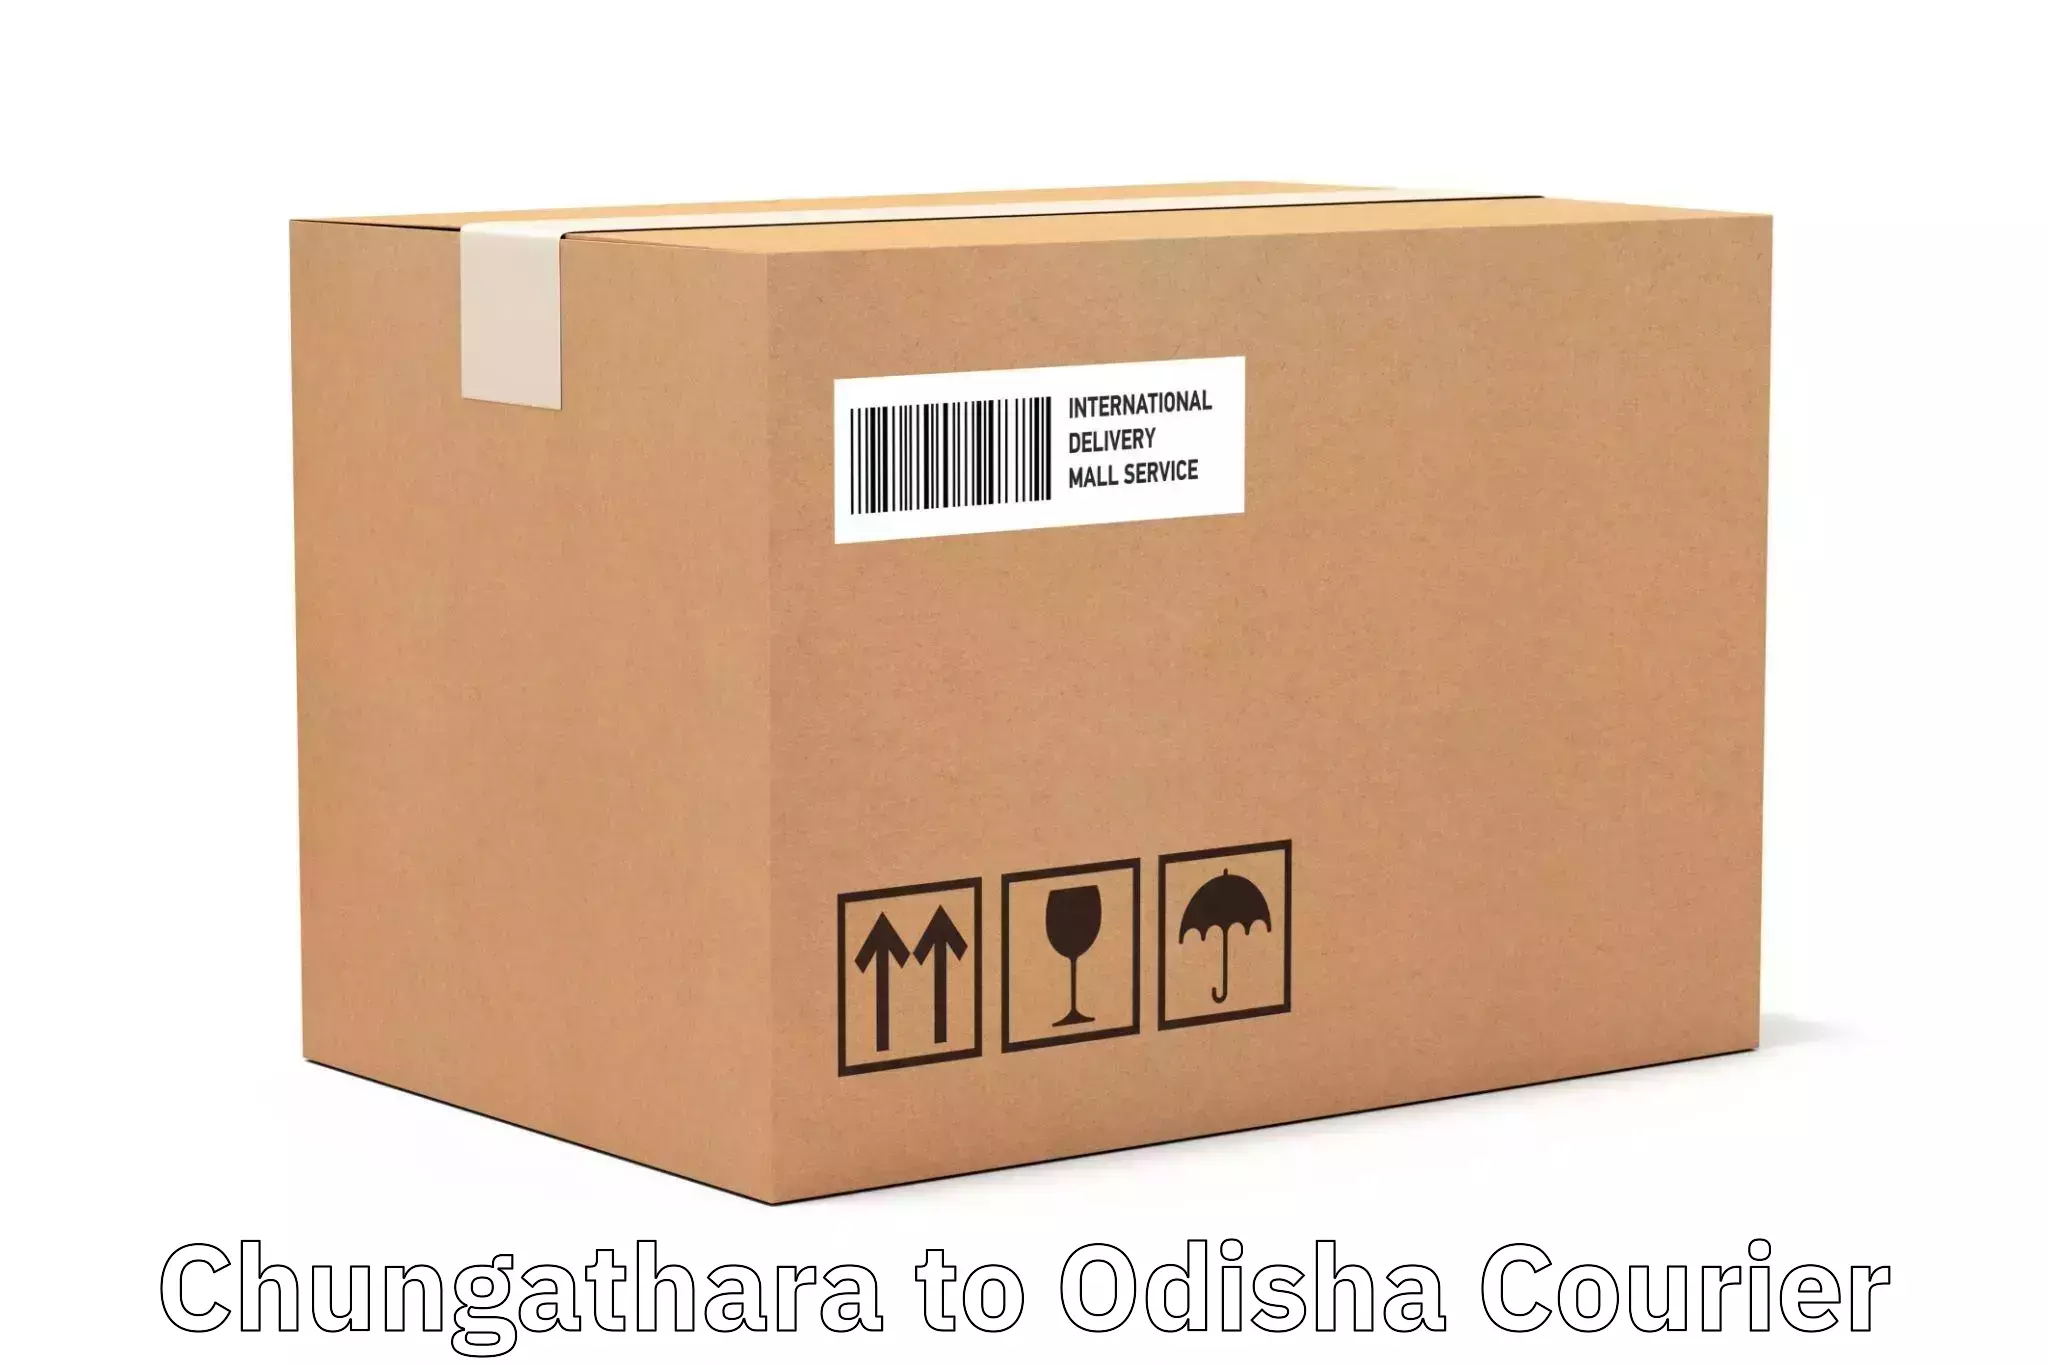 Remote area delivery Chungathara to Odisha